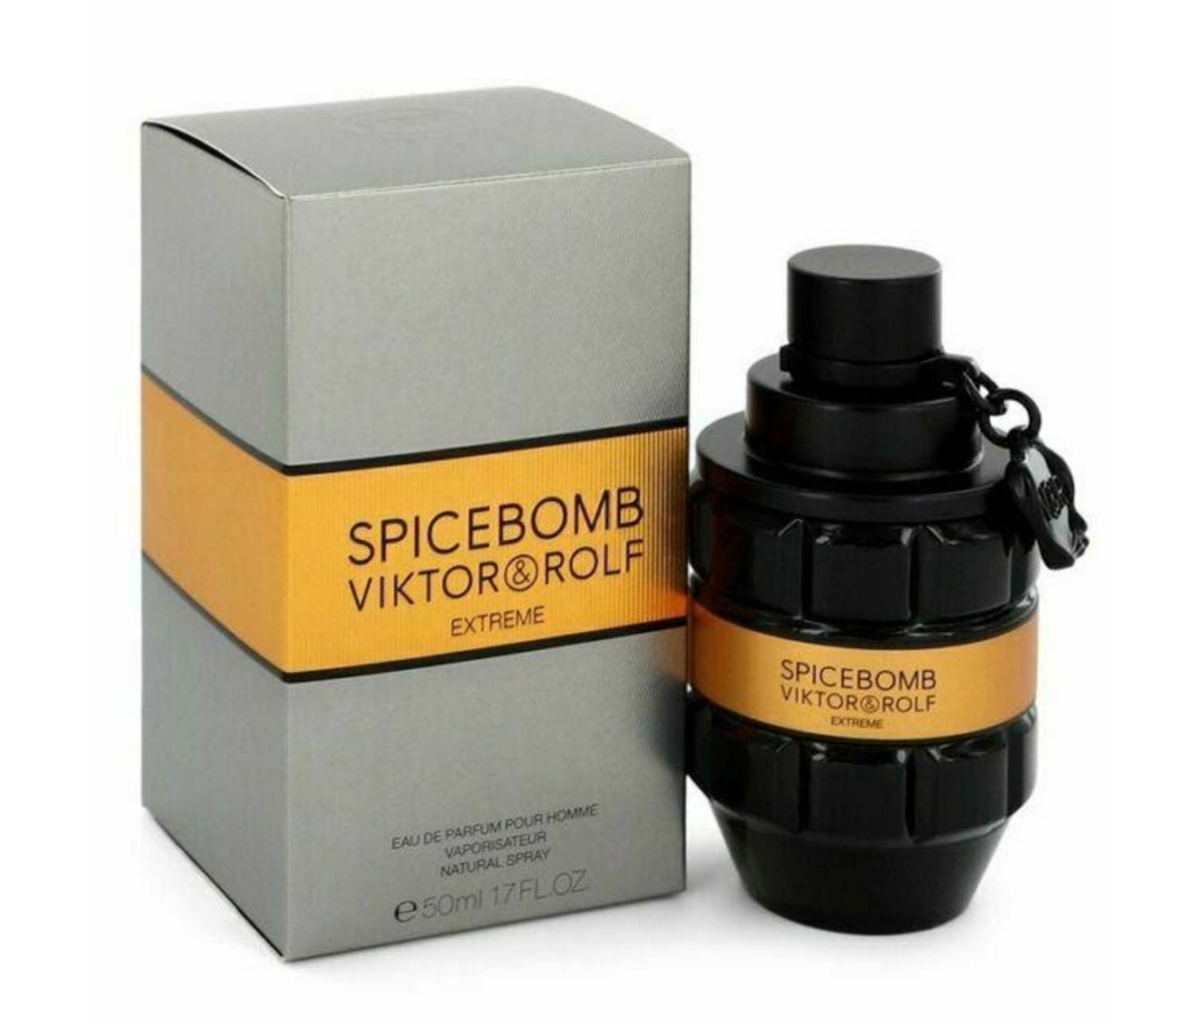 Spicebomb Extreme by Viktor & Rolf